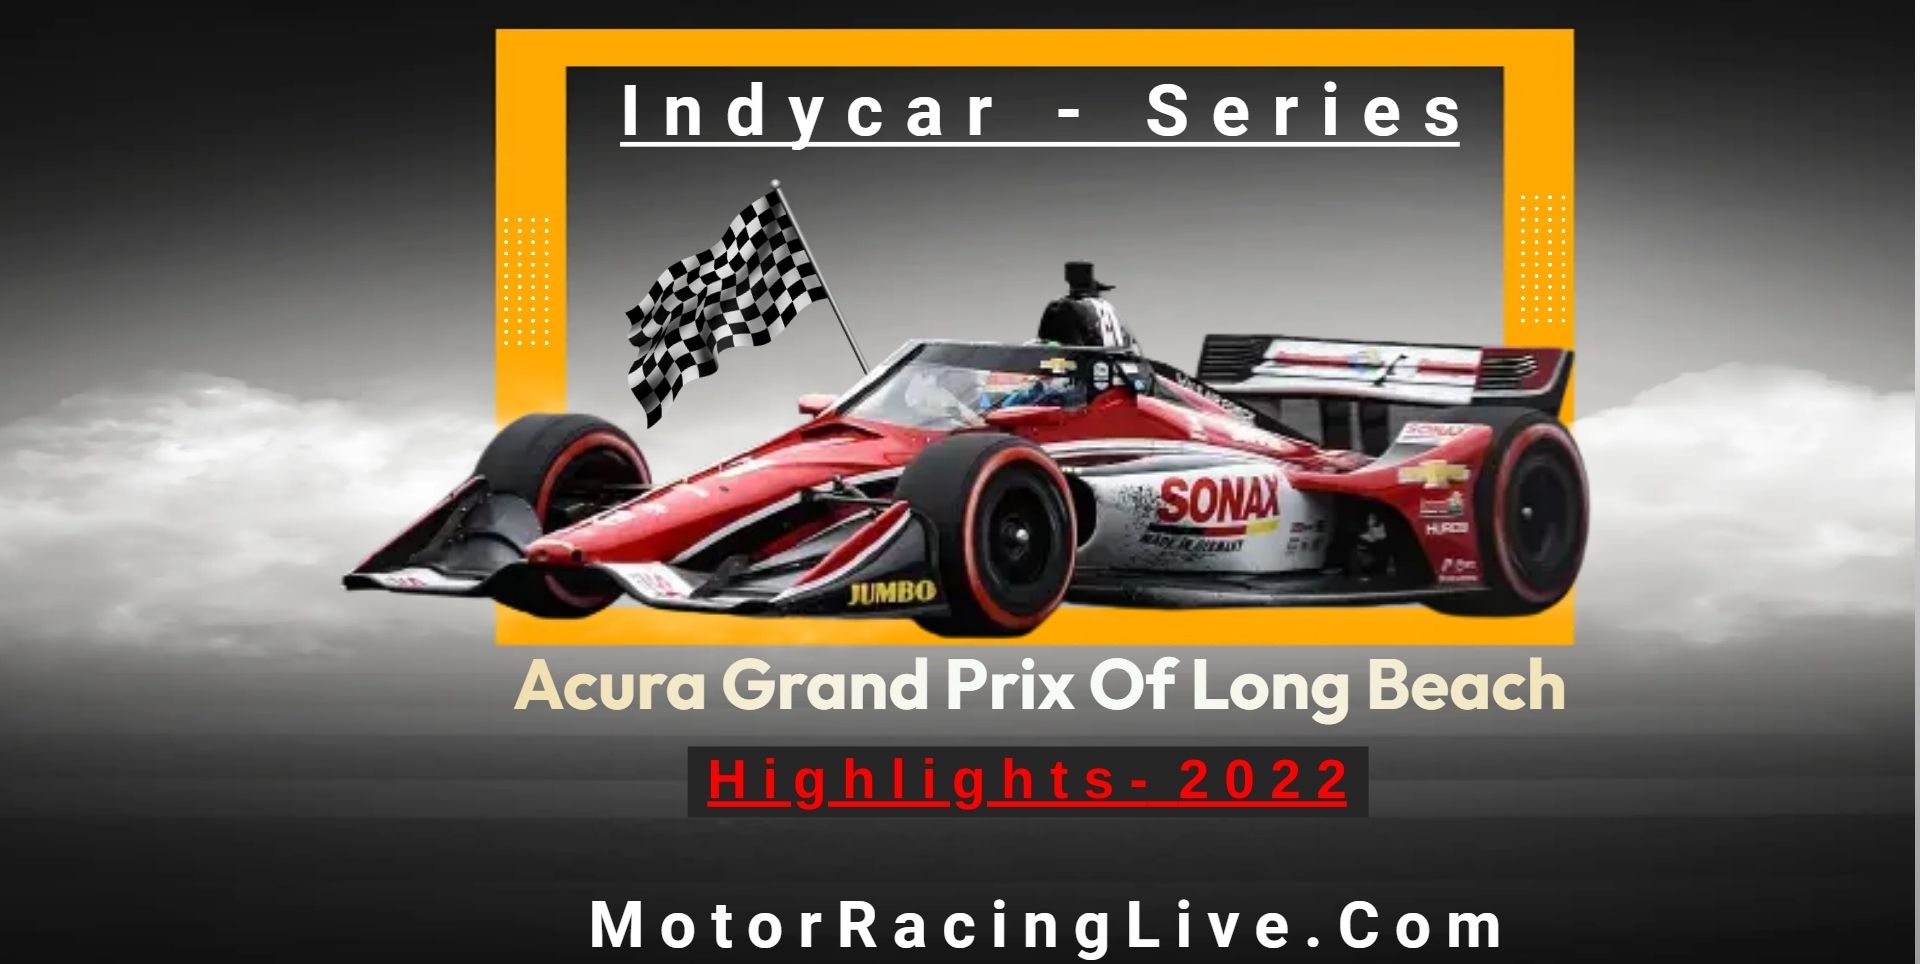 Acura Grand Prix Of Long Beach Highlights 2022 Indycar